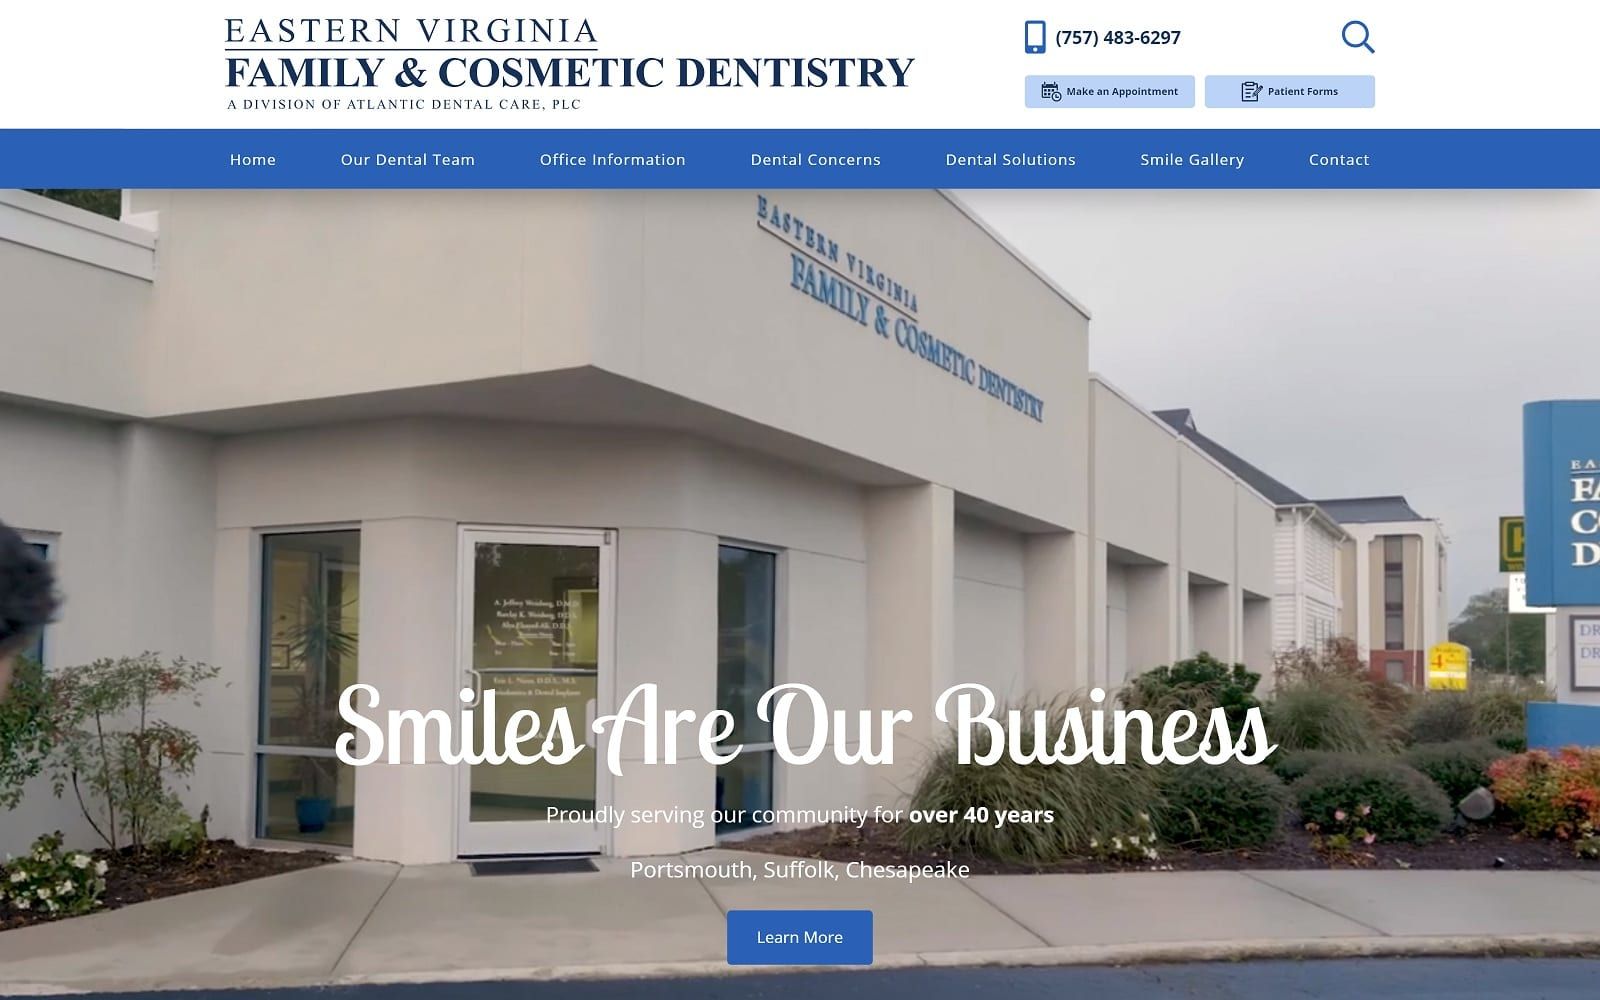 The screenshot of eastern virginia family & cosmetic dentistry evadental. Com website